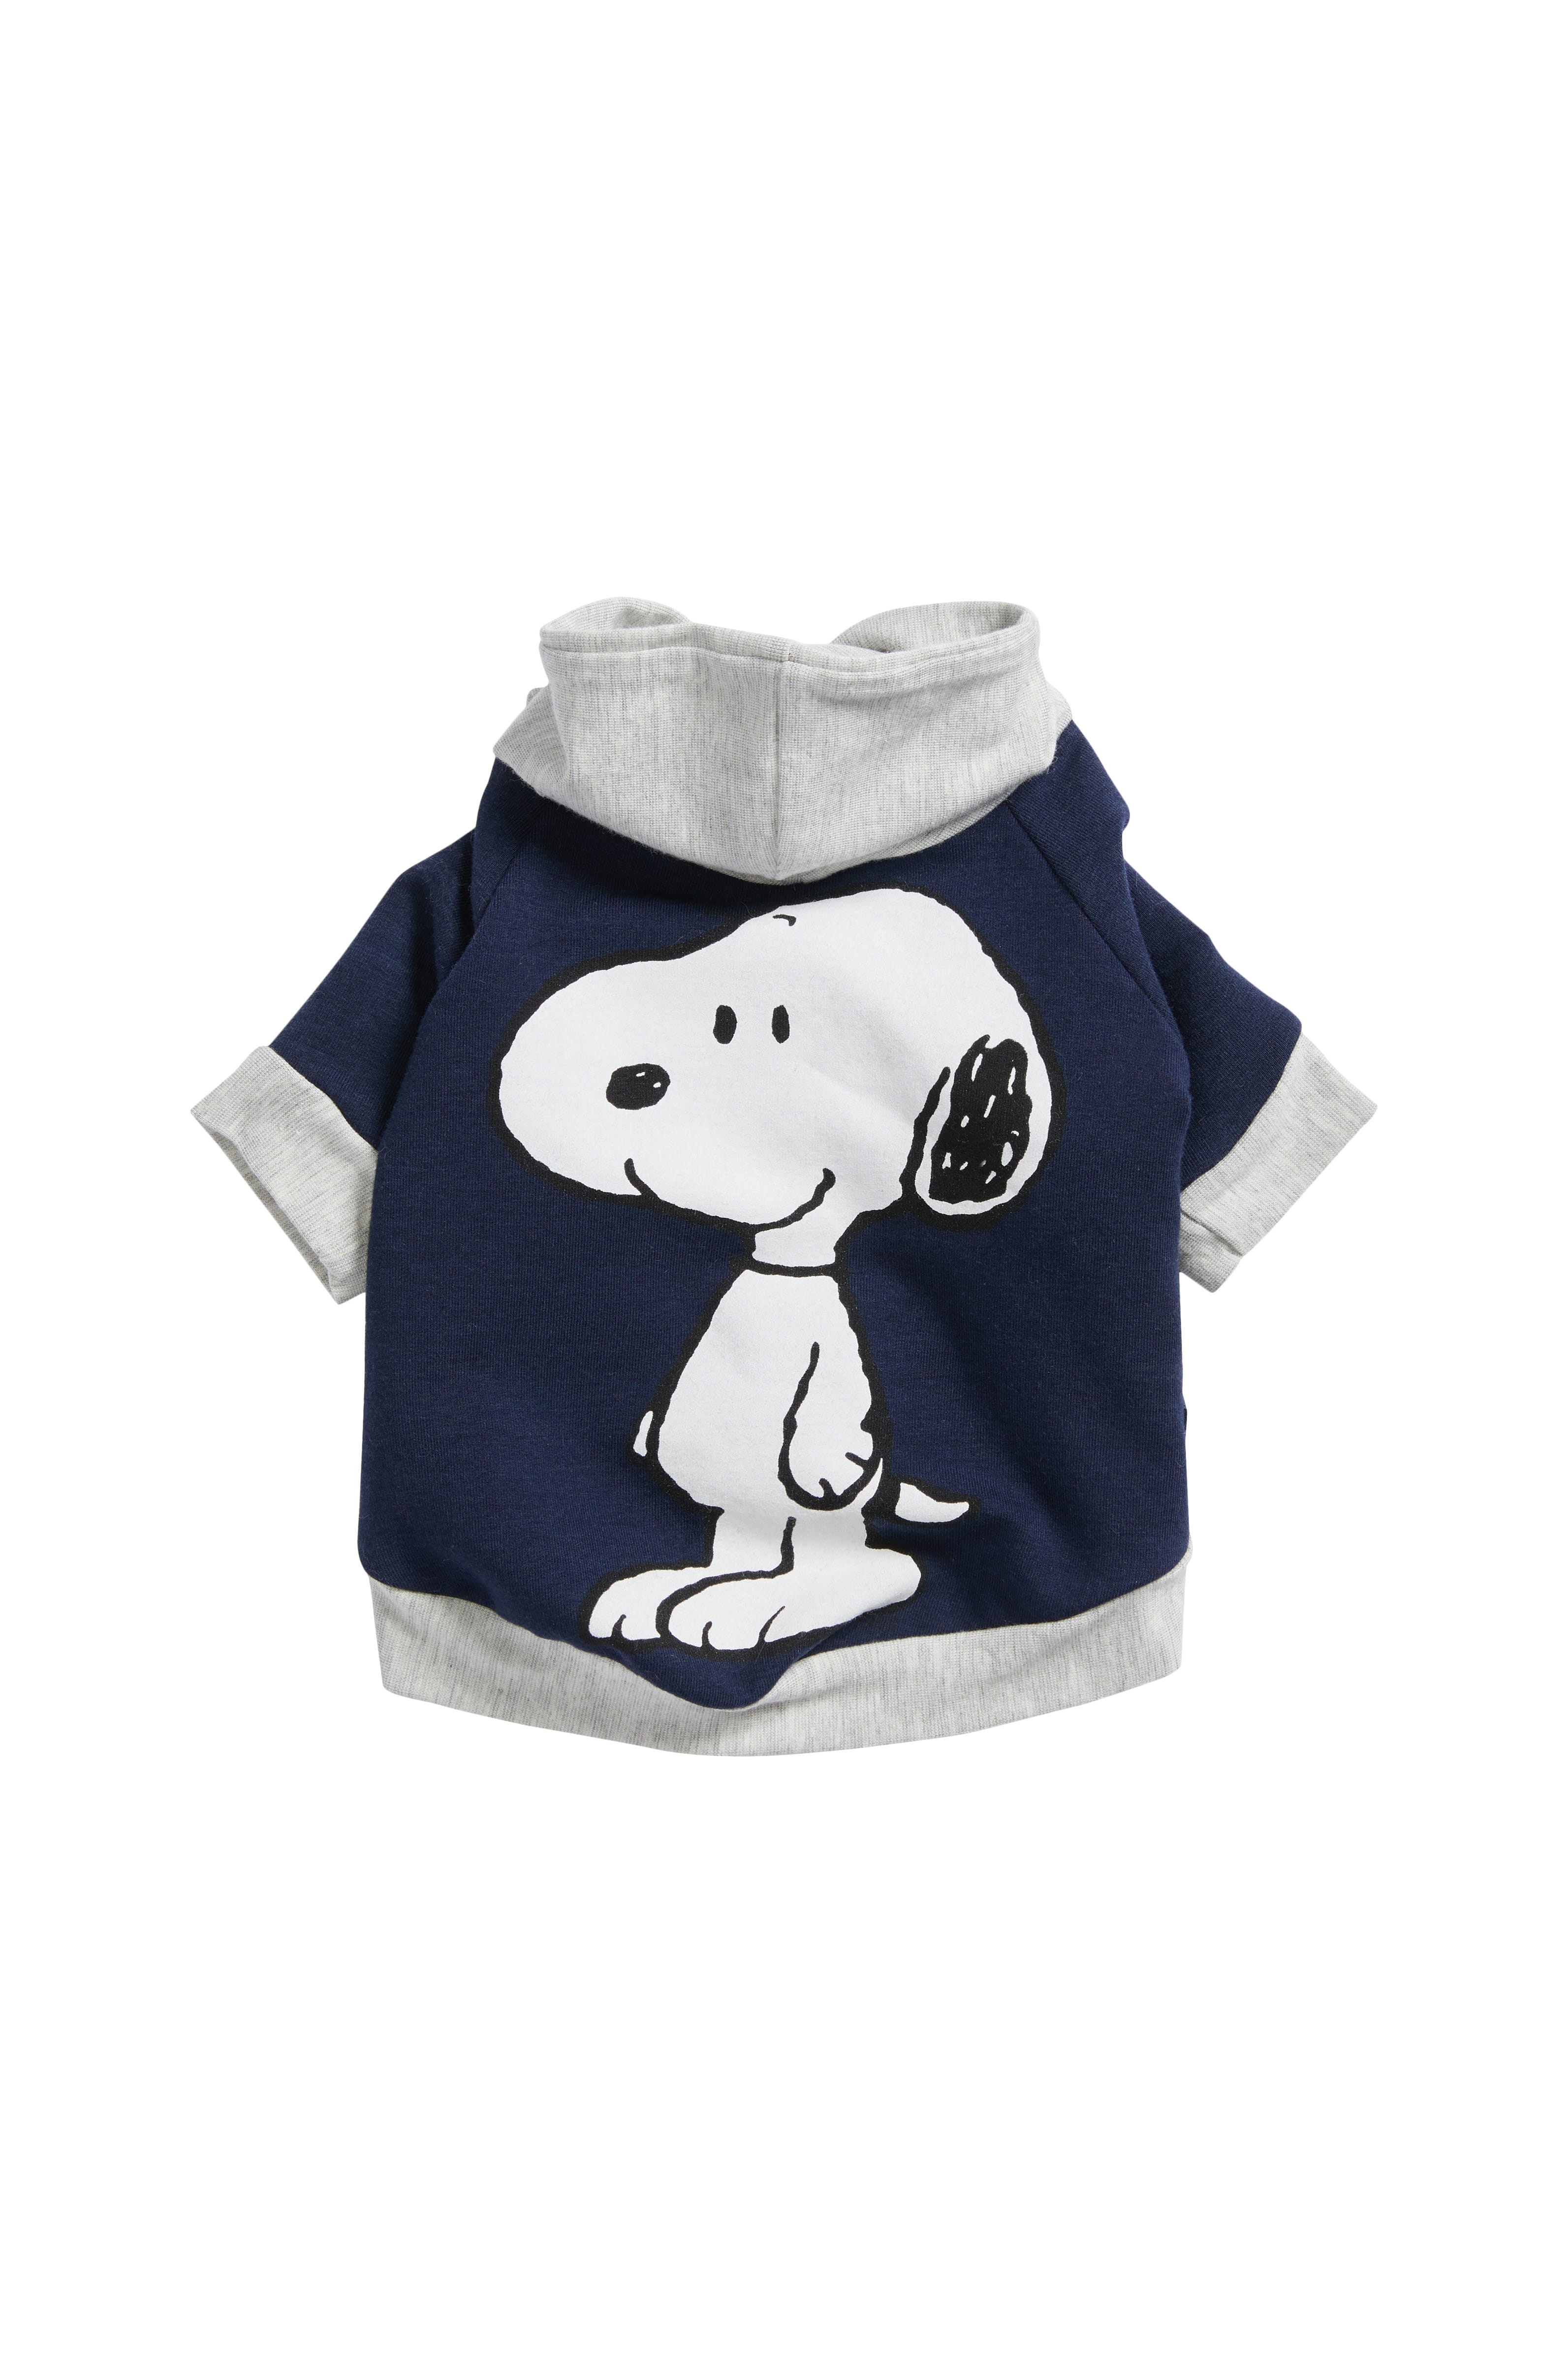 snoopy dog sweater